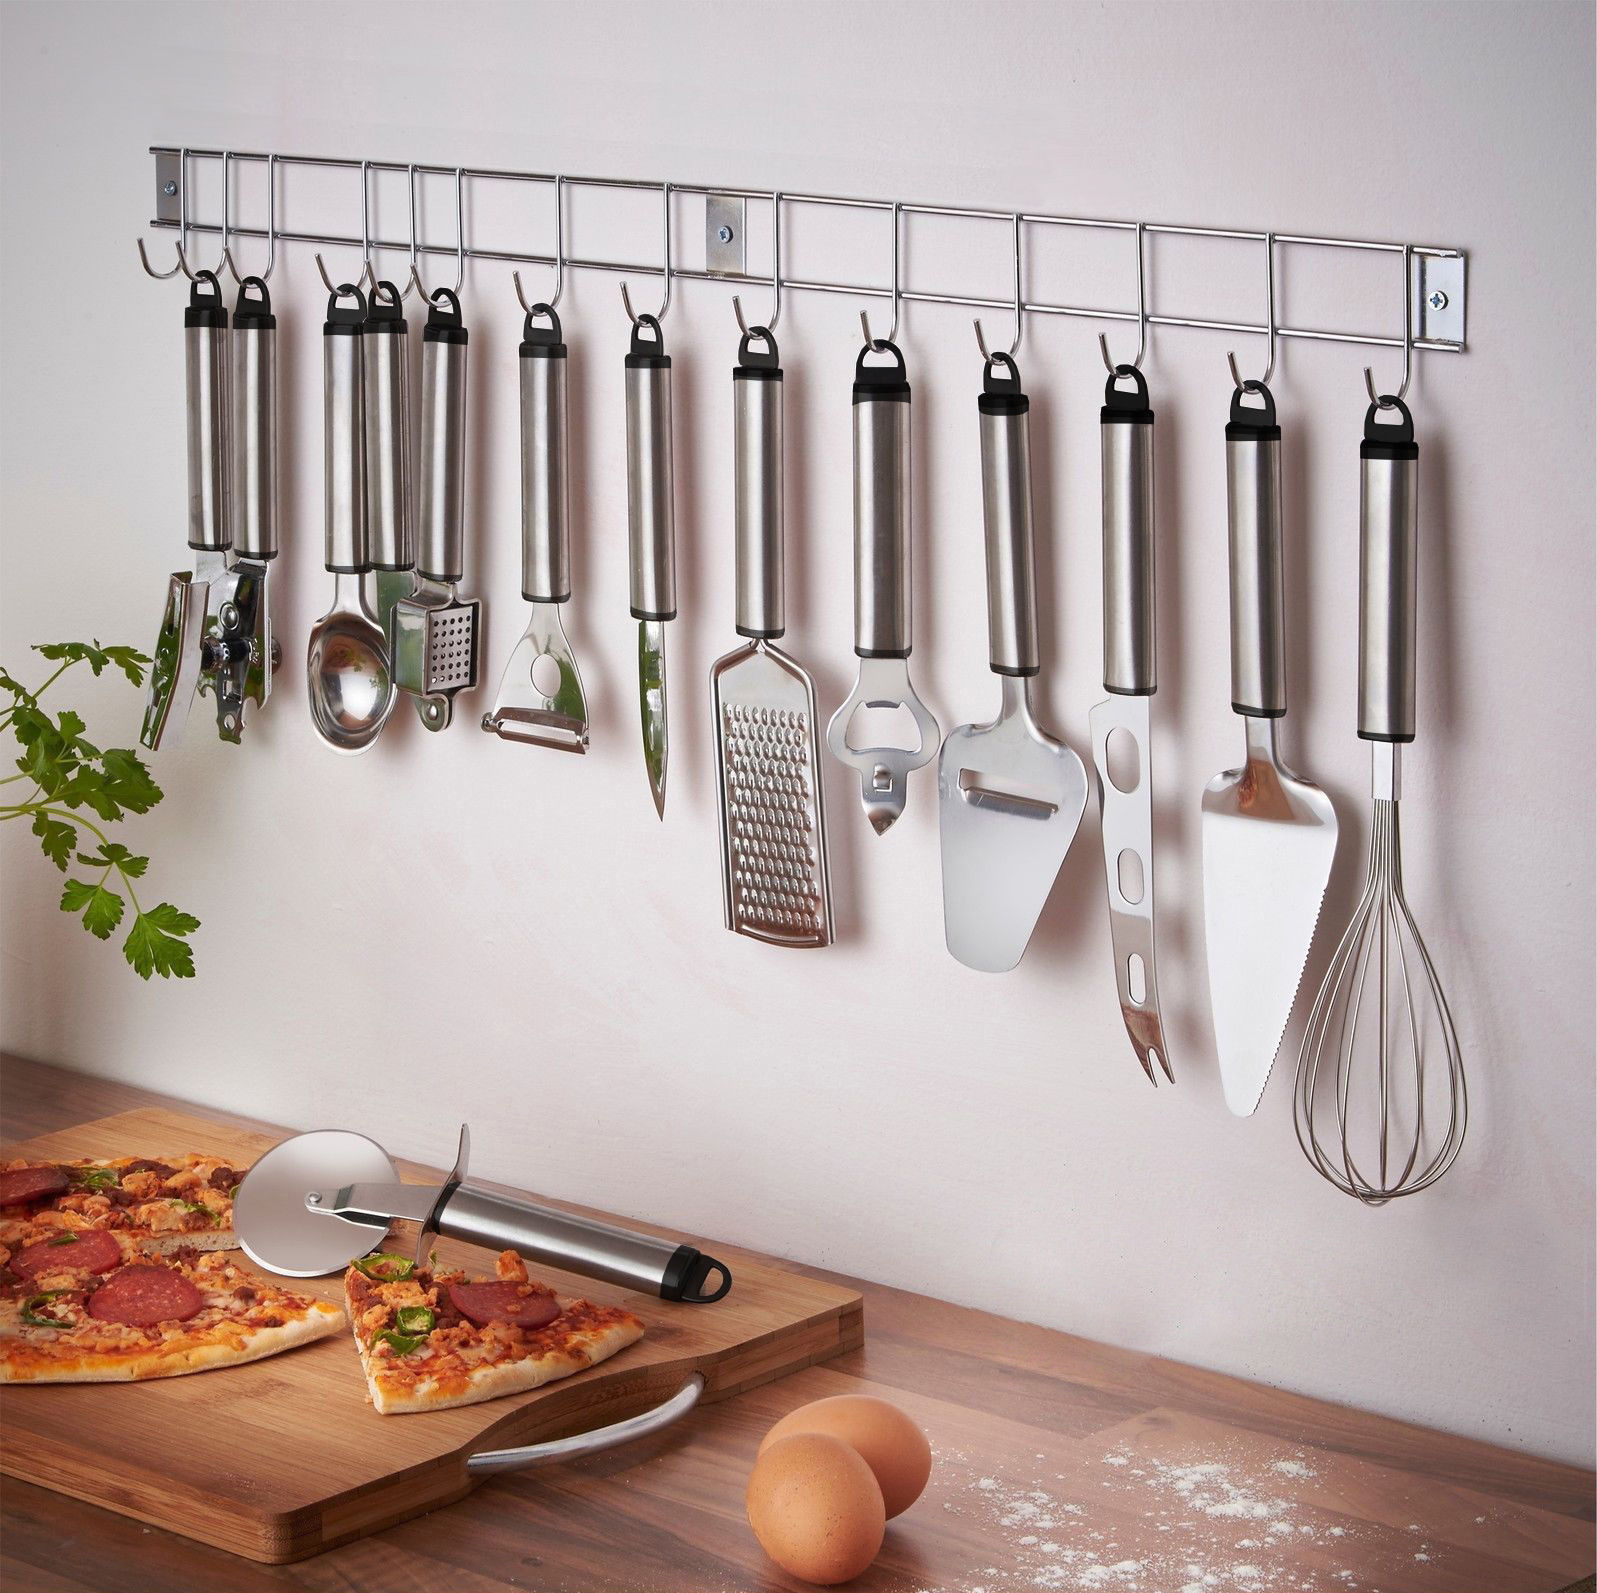 13pc Cooking Utensil Set Stainless Steel Kitchen Gadget Tool With Hanging Bar | eBay